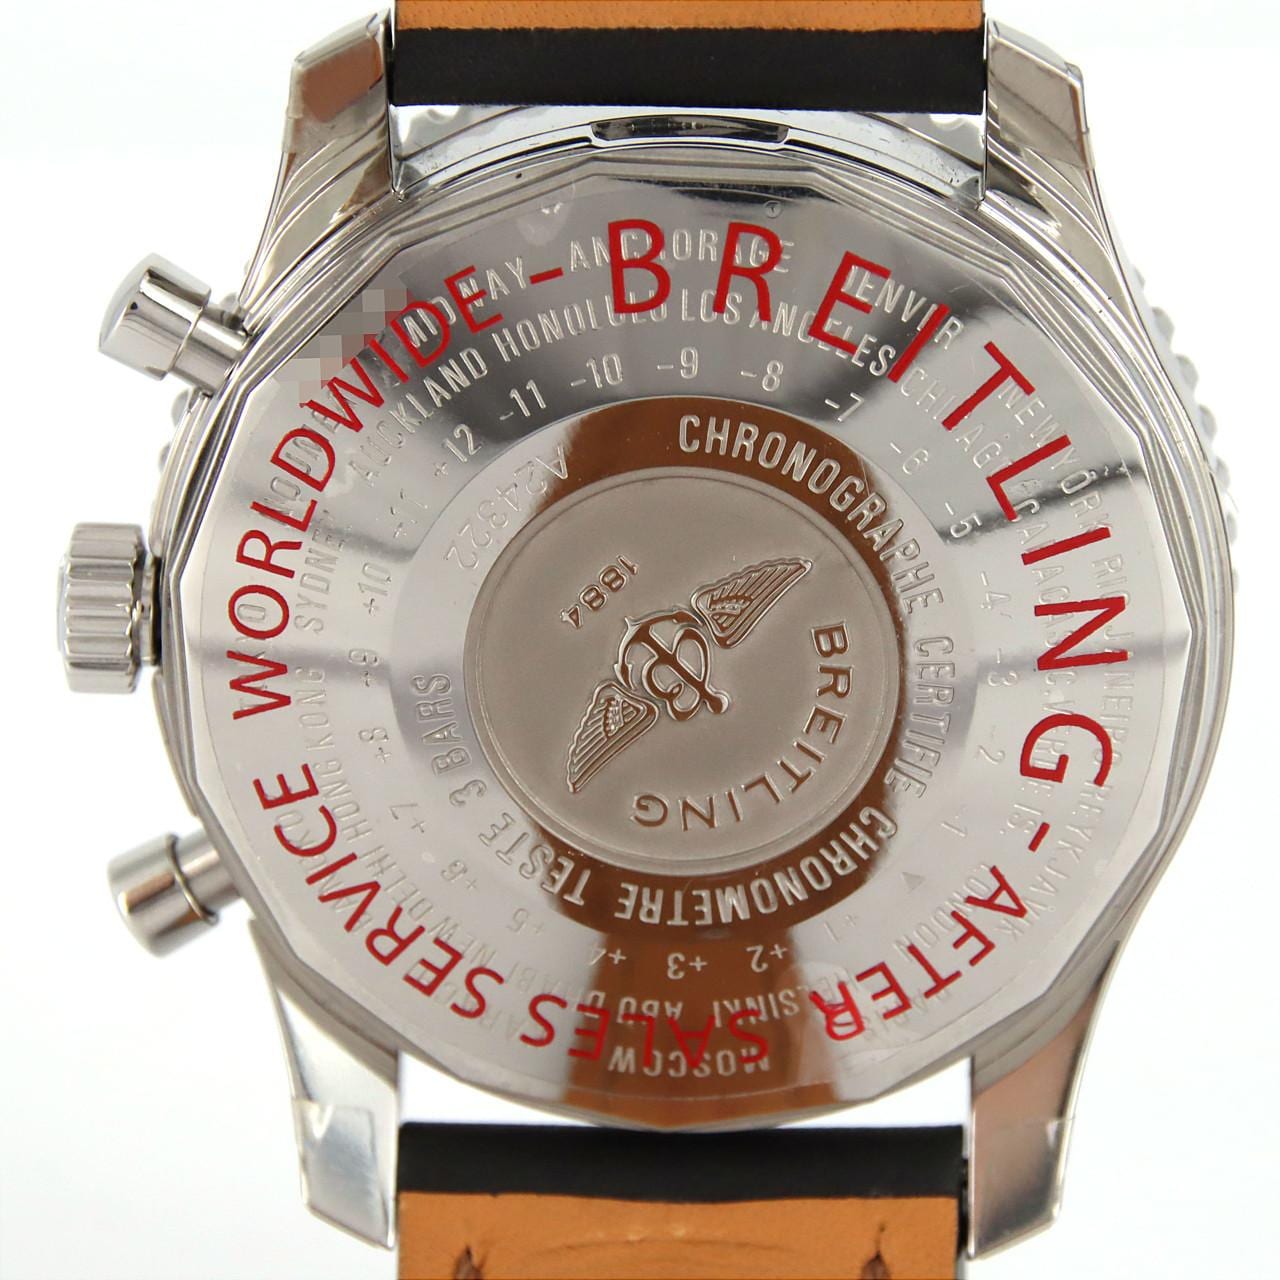 BREITLING】ブライトリング ナビタイマー ワールド クロノグラフ A24322 自動巻き メンズ - ブランド腕時計